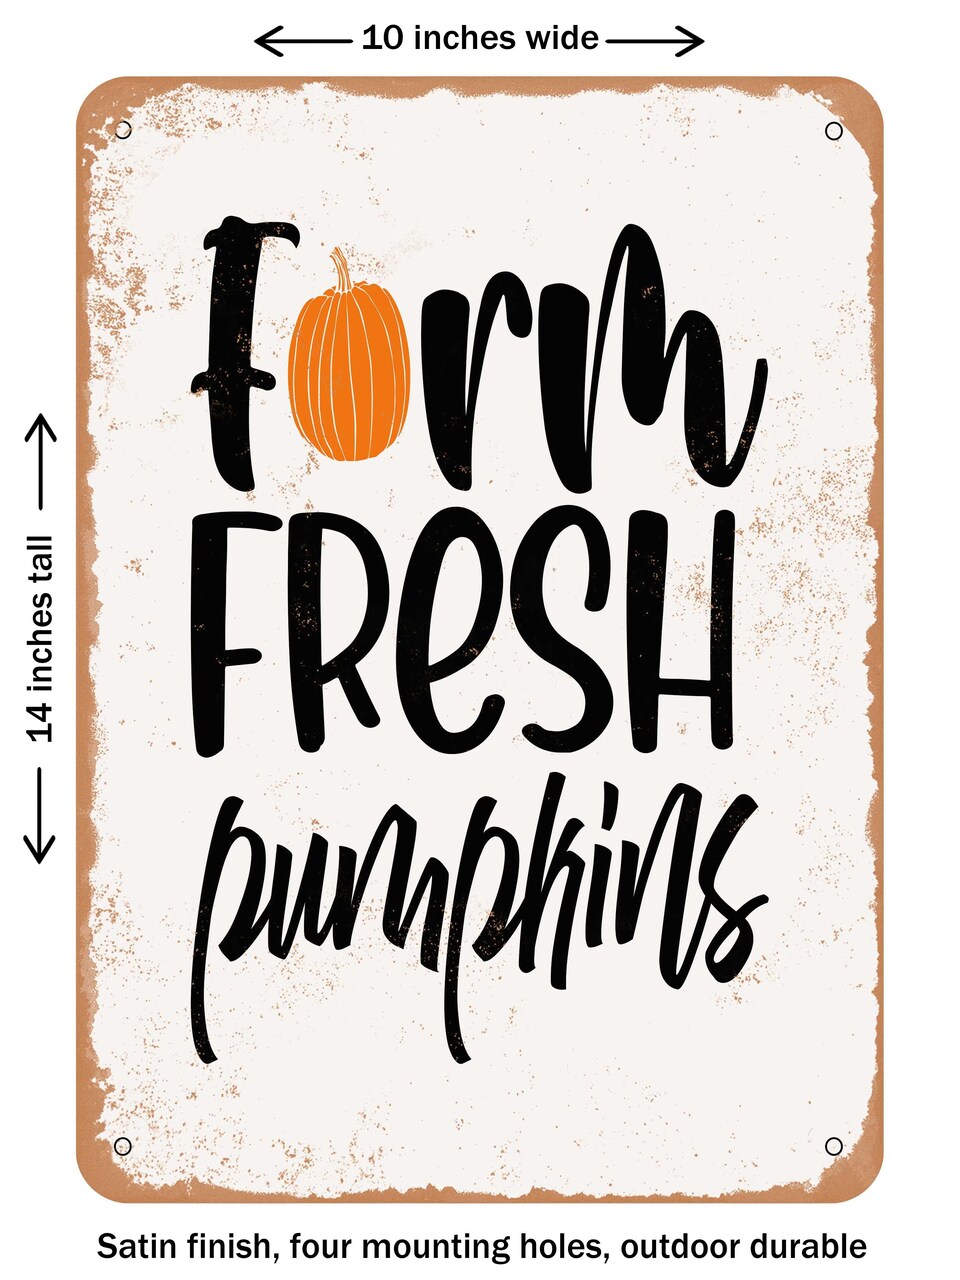 DECORATIVE METAL SIGN - Farm Fresh Pumpkins  - Vintage Rusty Look